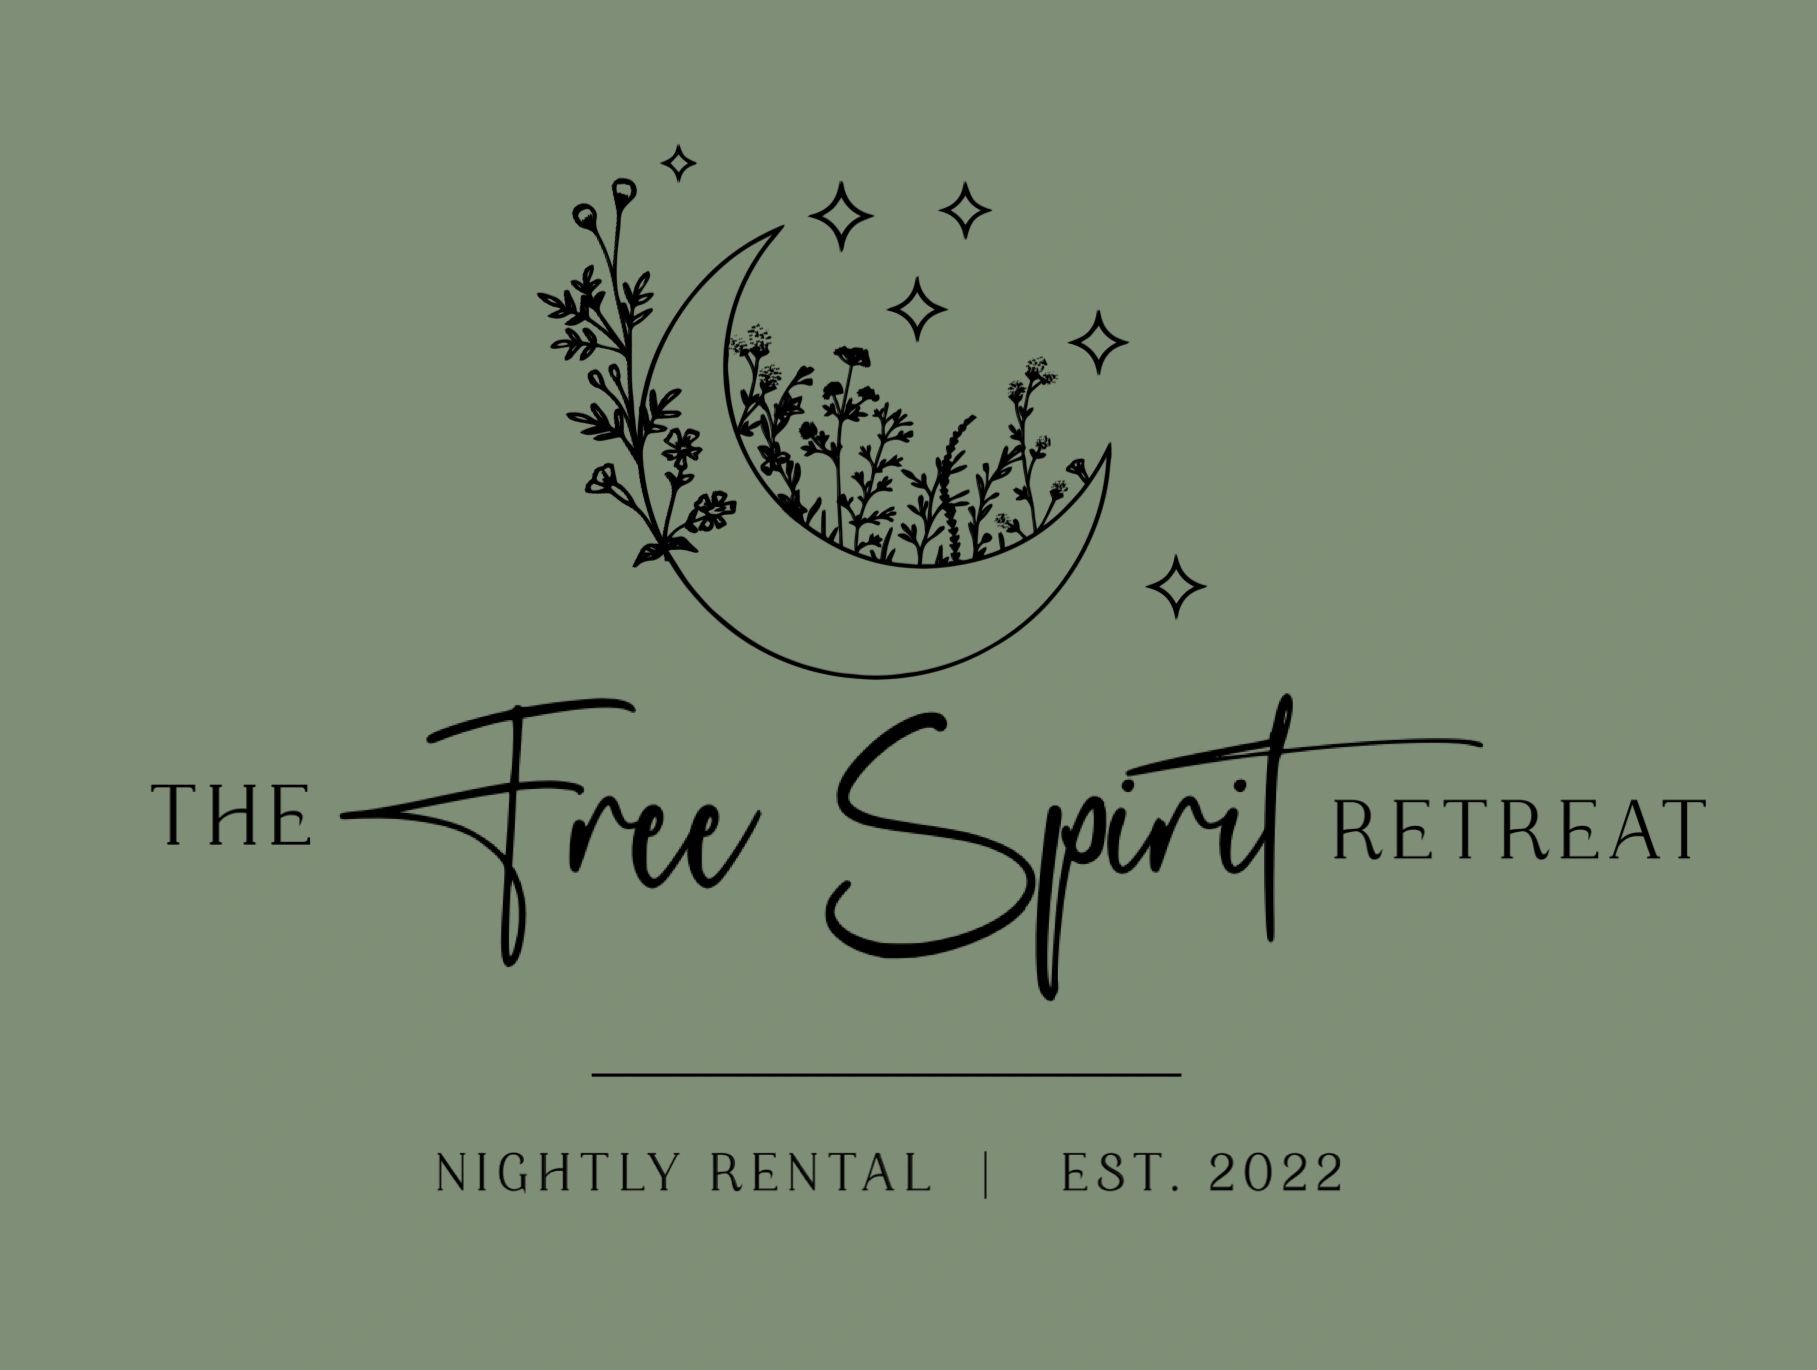 The Free Spirit Retreat